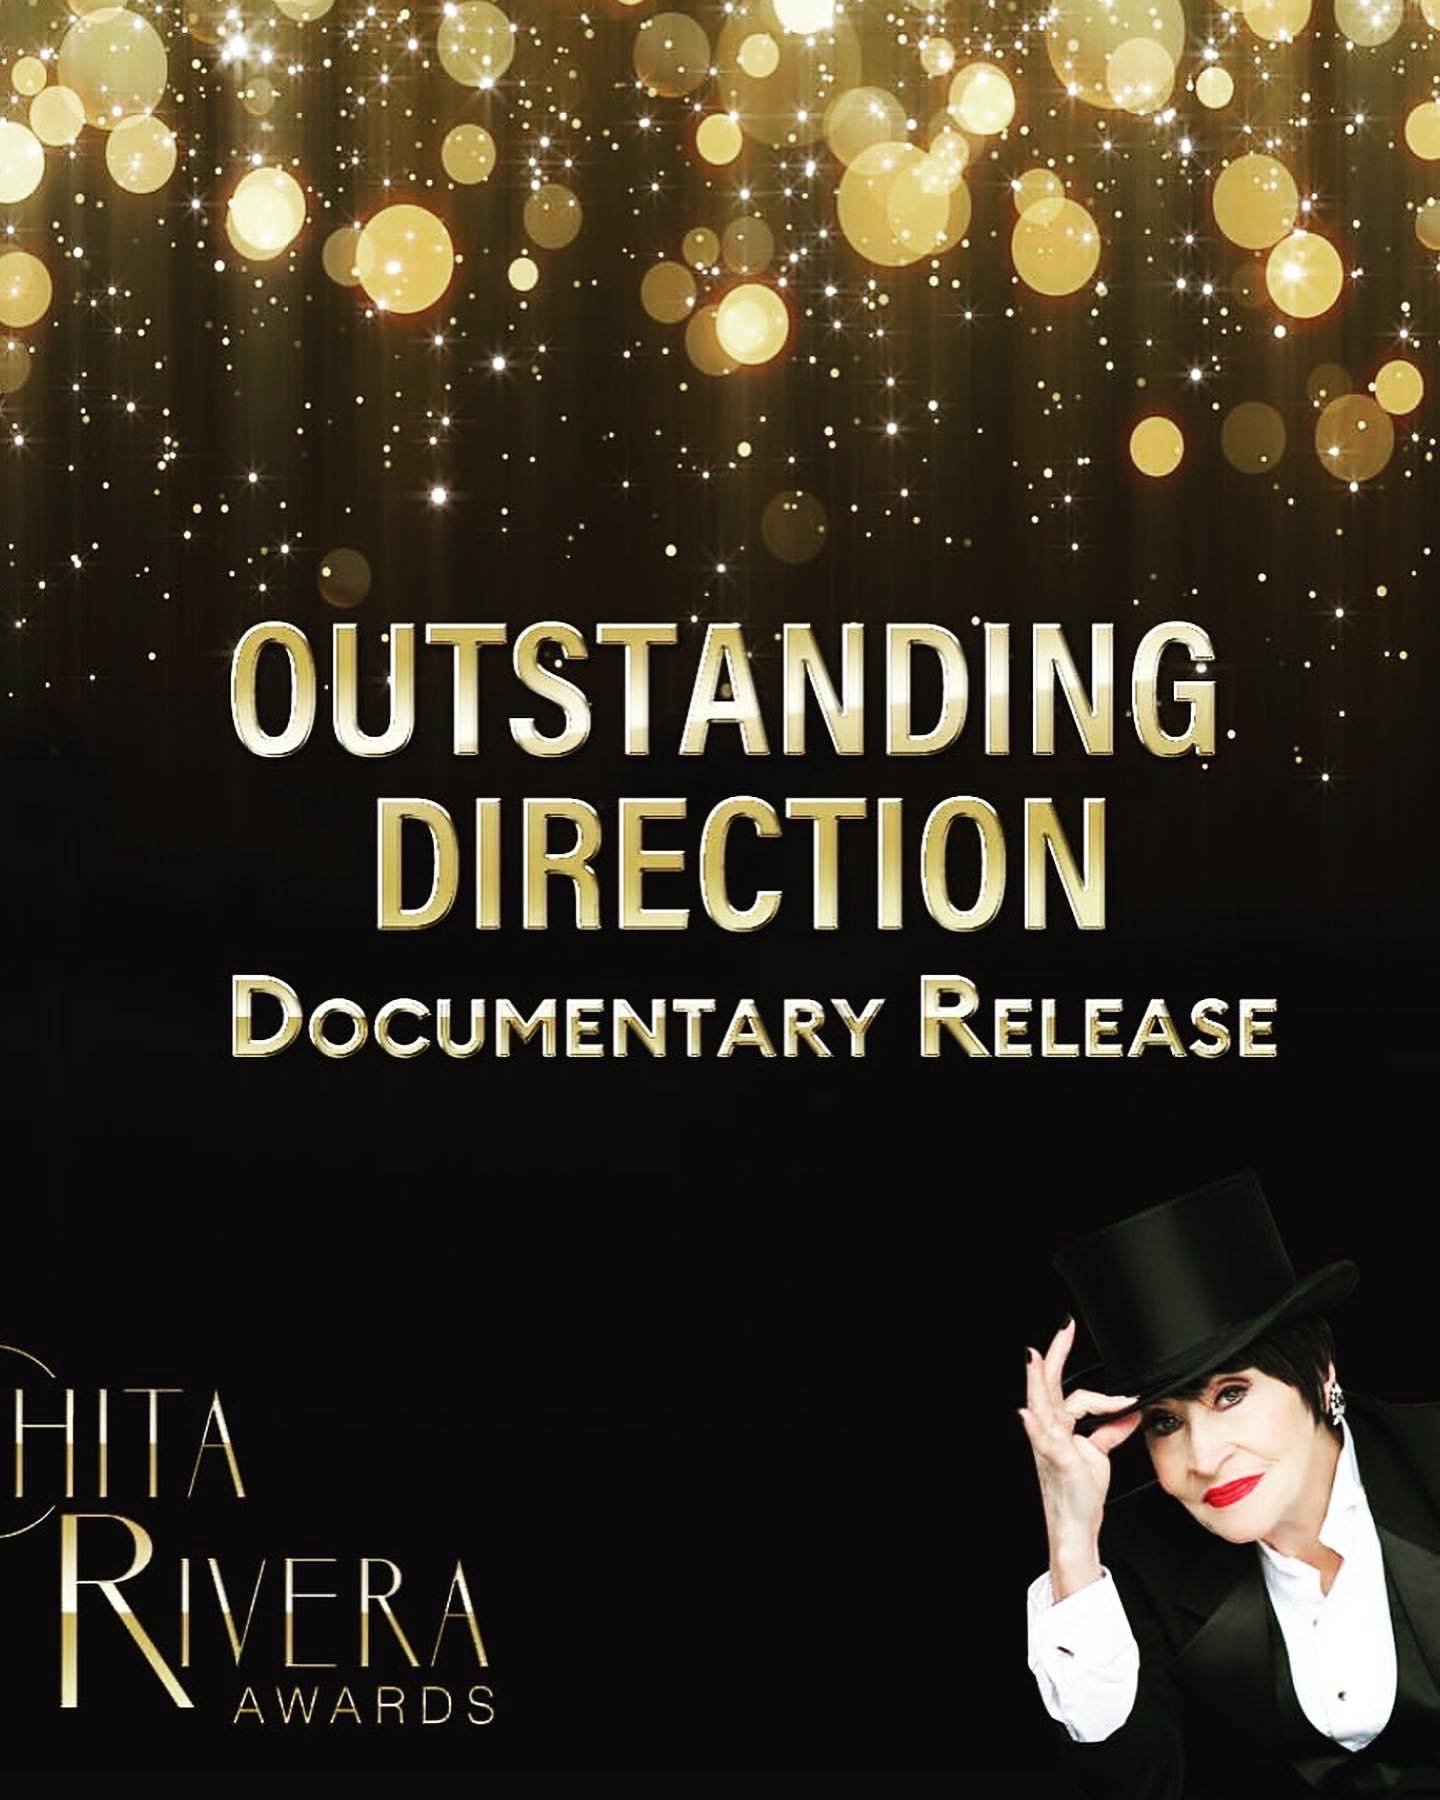 Outstanding Direction image Chita Rivera Awards.JPG